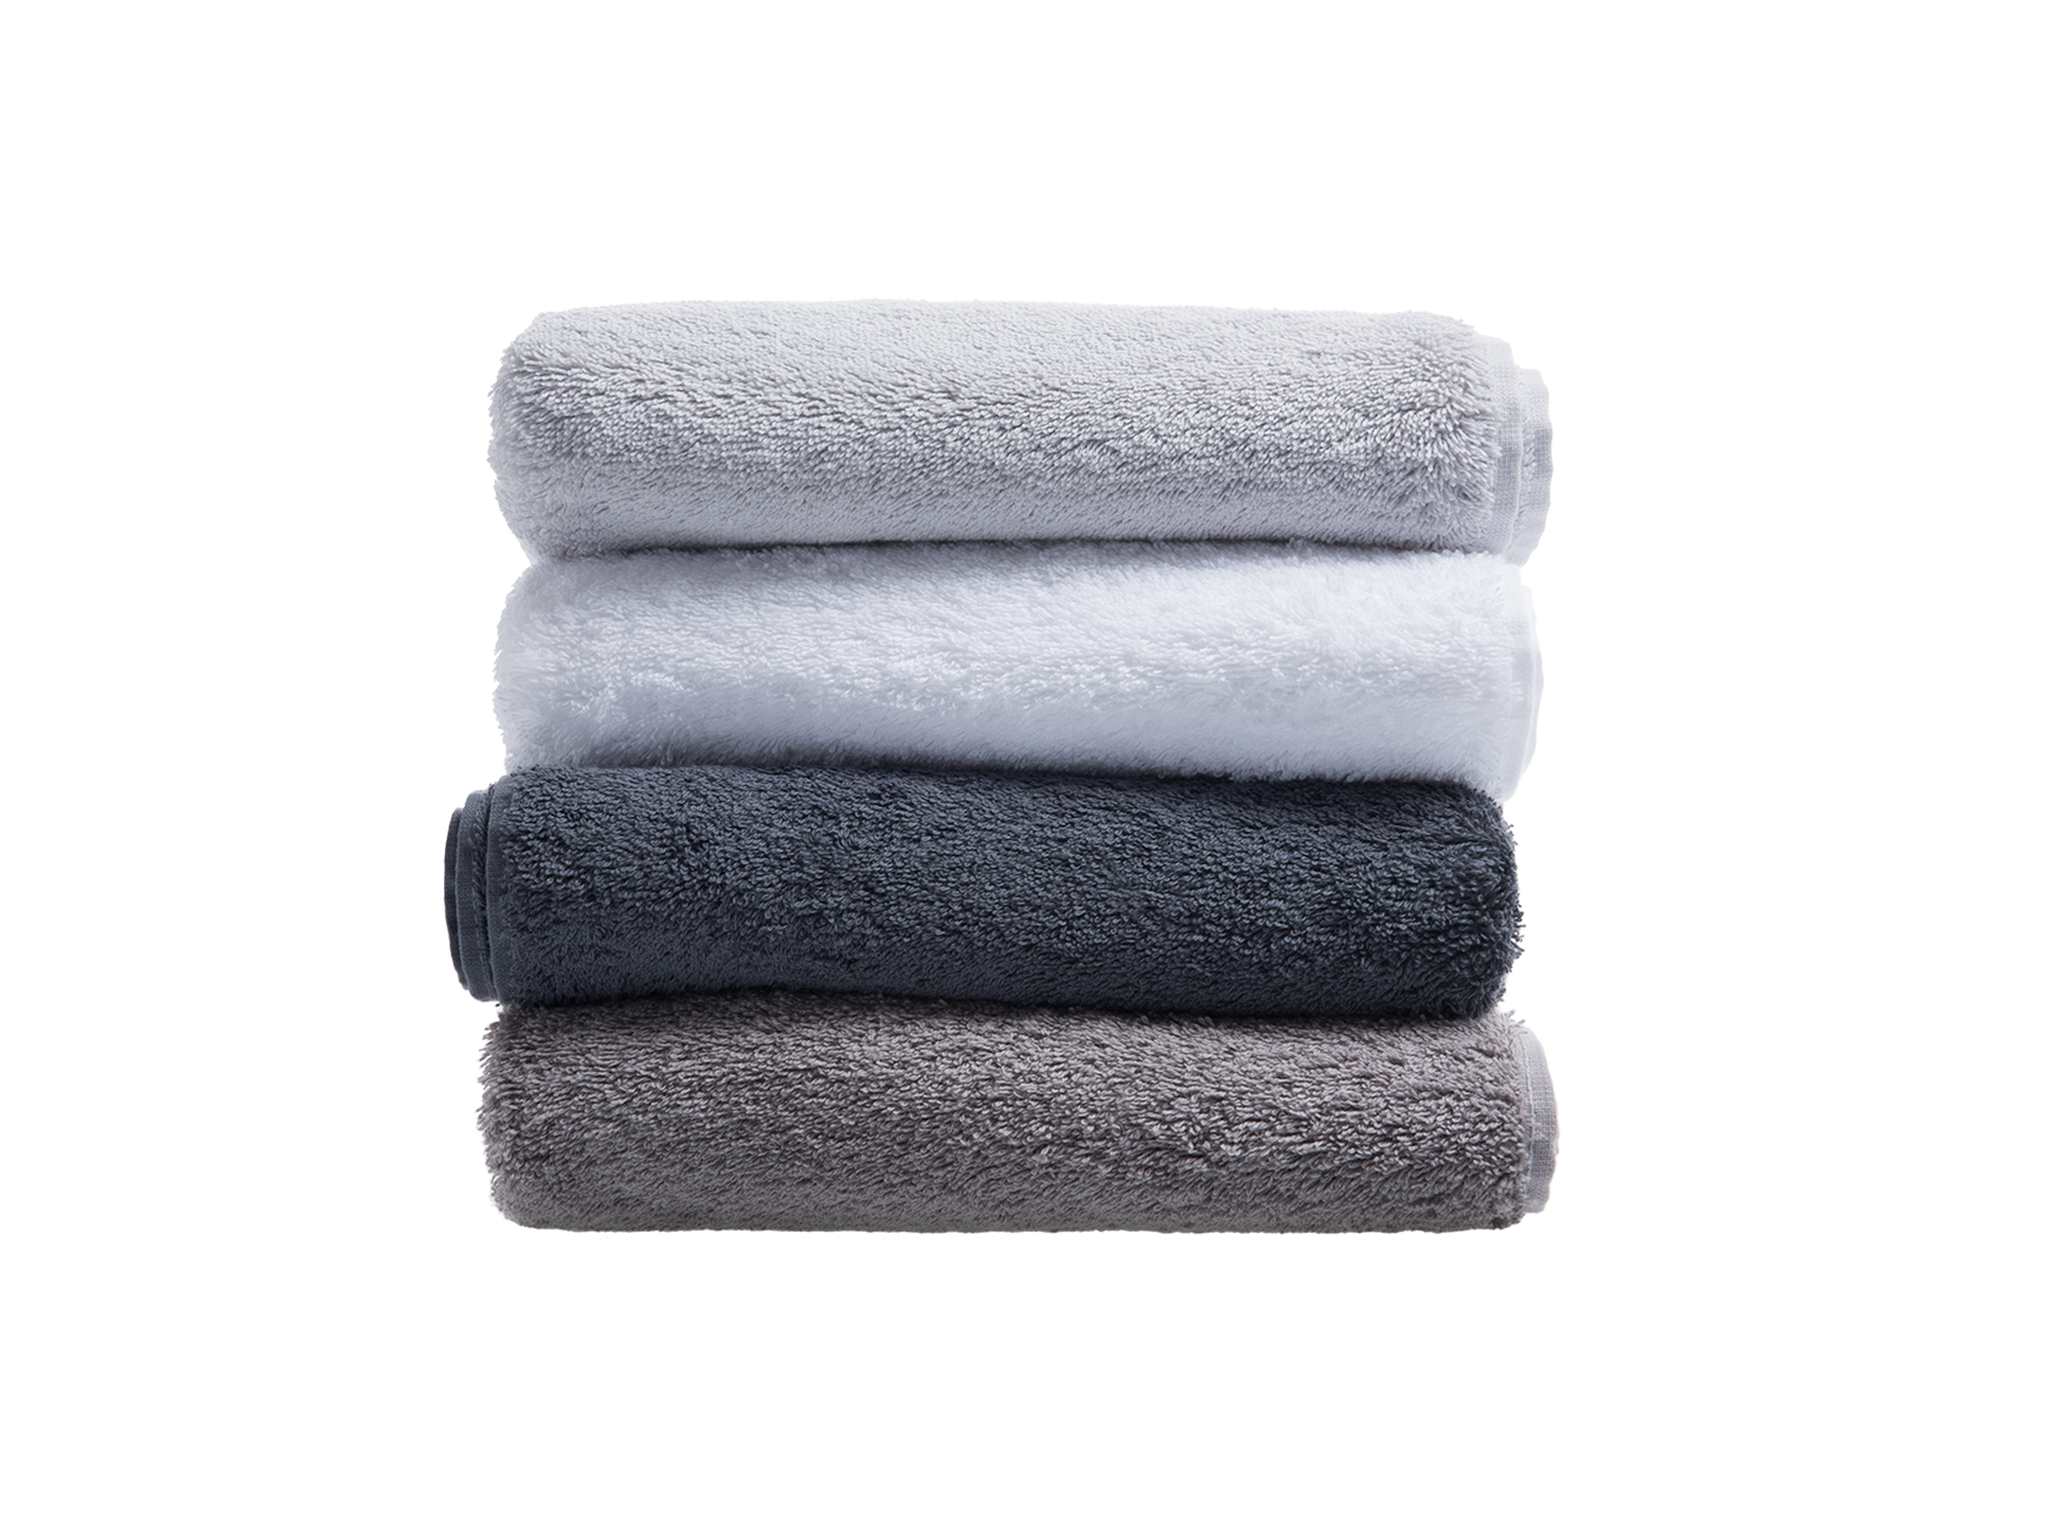 2 Piece Bathroom Bath Towel Sheet Soft Egyptian Cotton Premium Luxury Aubergine 